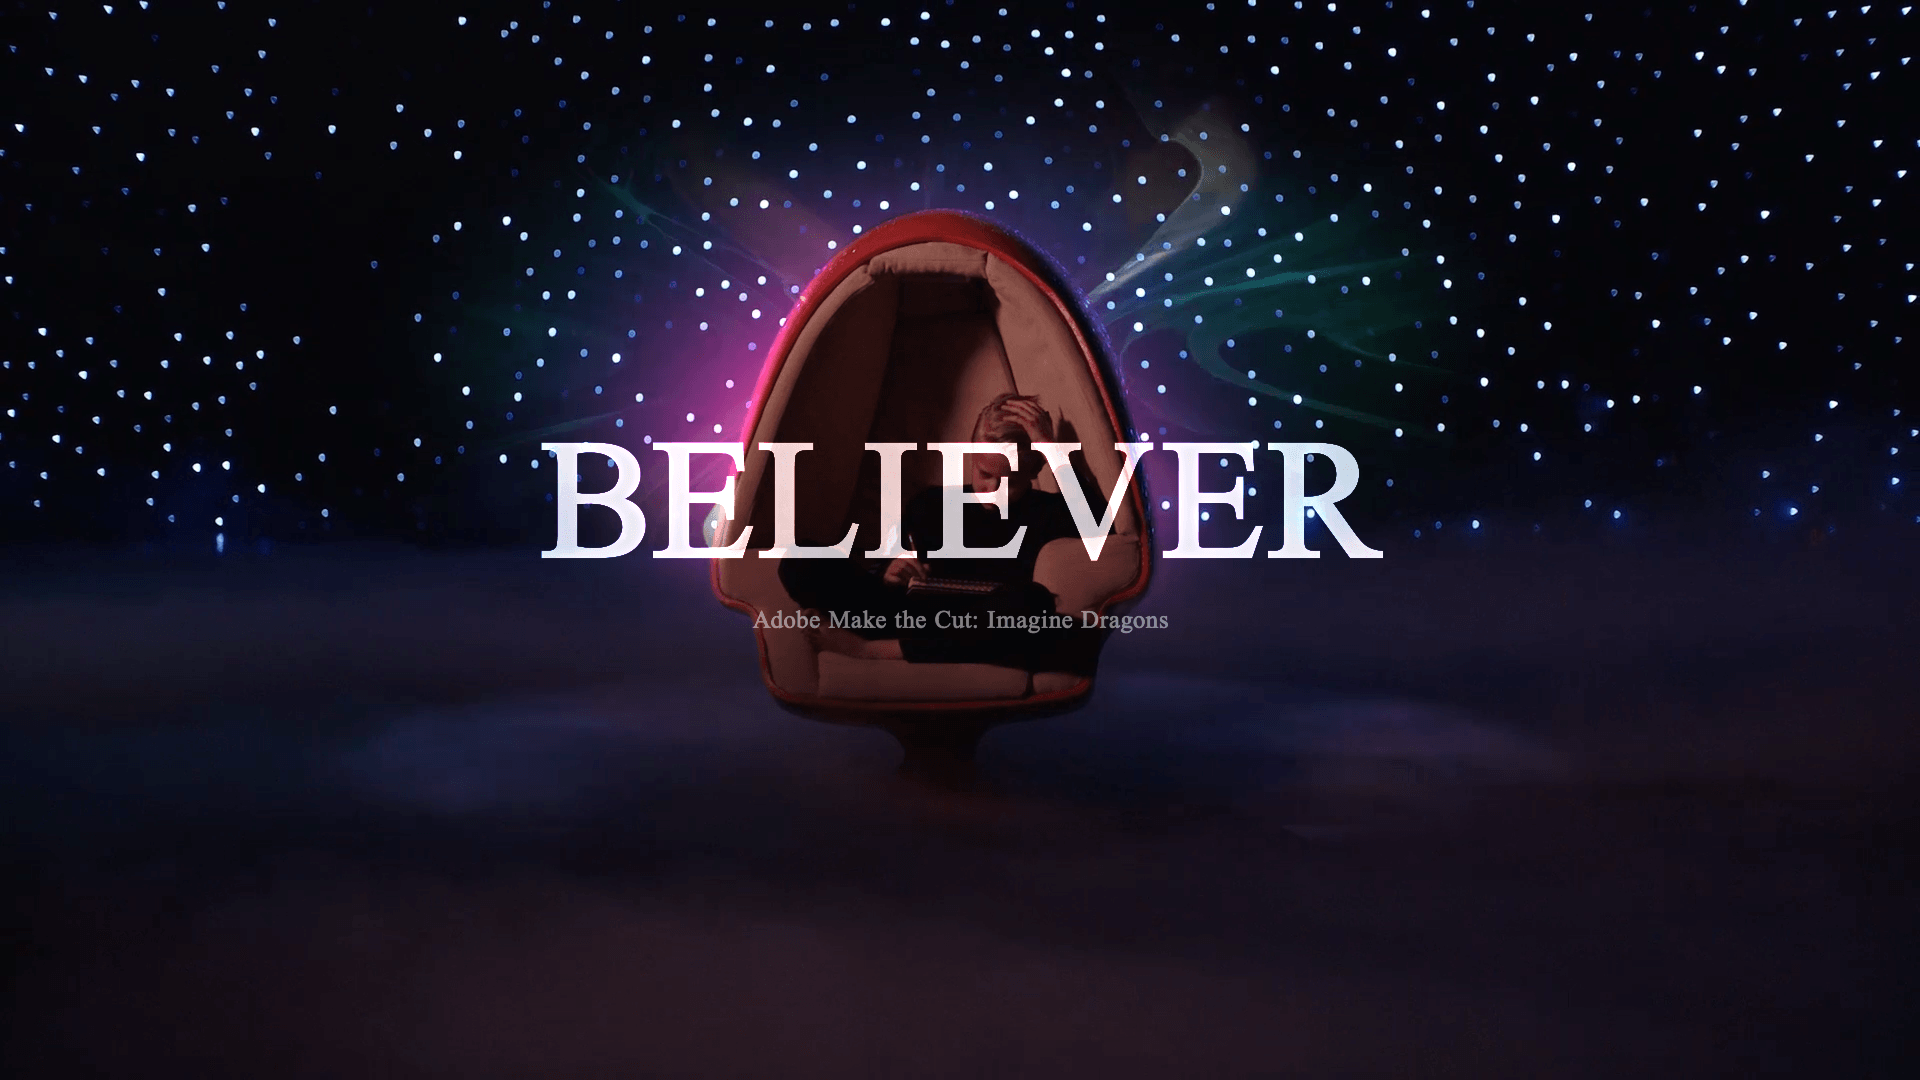 Believer imagine русский. Имеджин Драгонс беливер. Беливер логотип. Imagine Dragons Believer обои. Драгон имейджинг беливер.